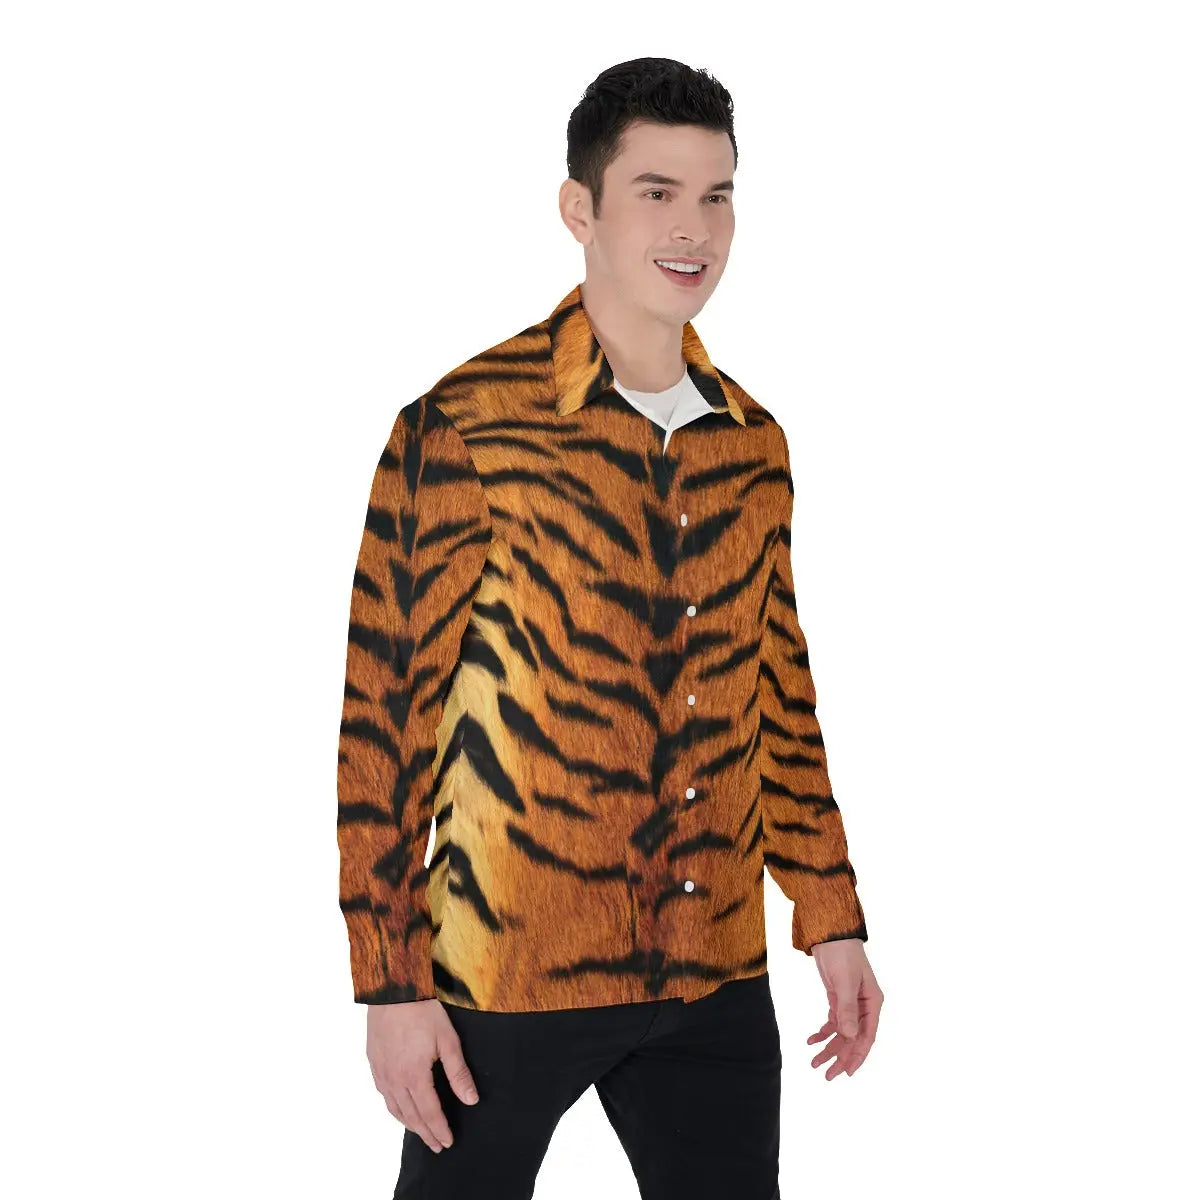 Yoycol Tiger Stripe Shirt Long Sleeve